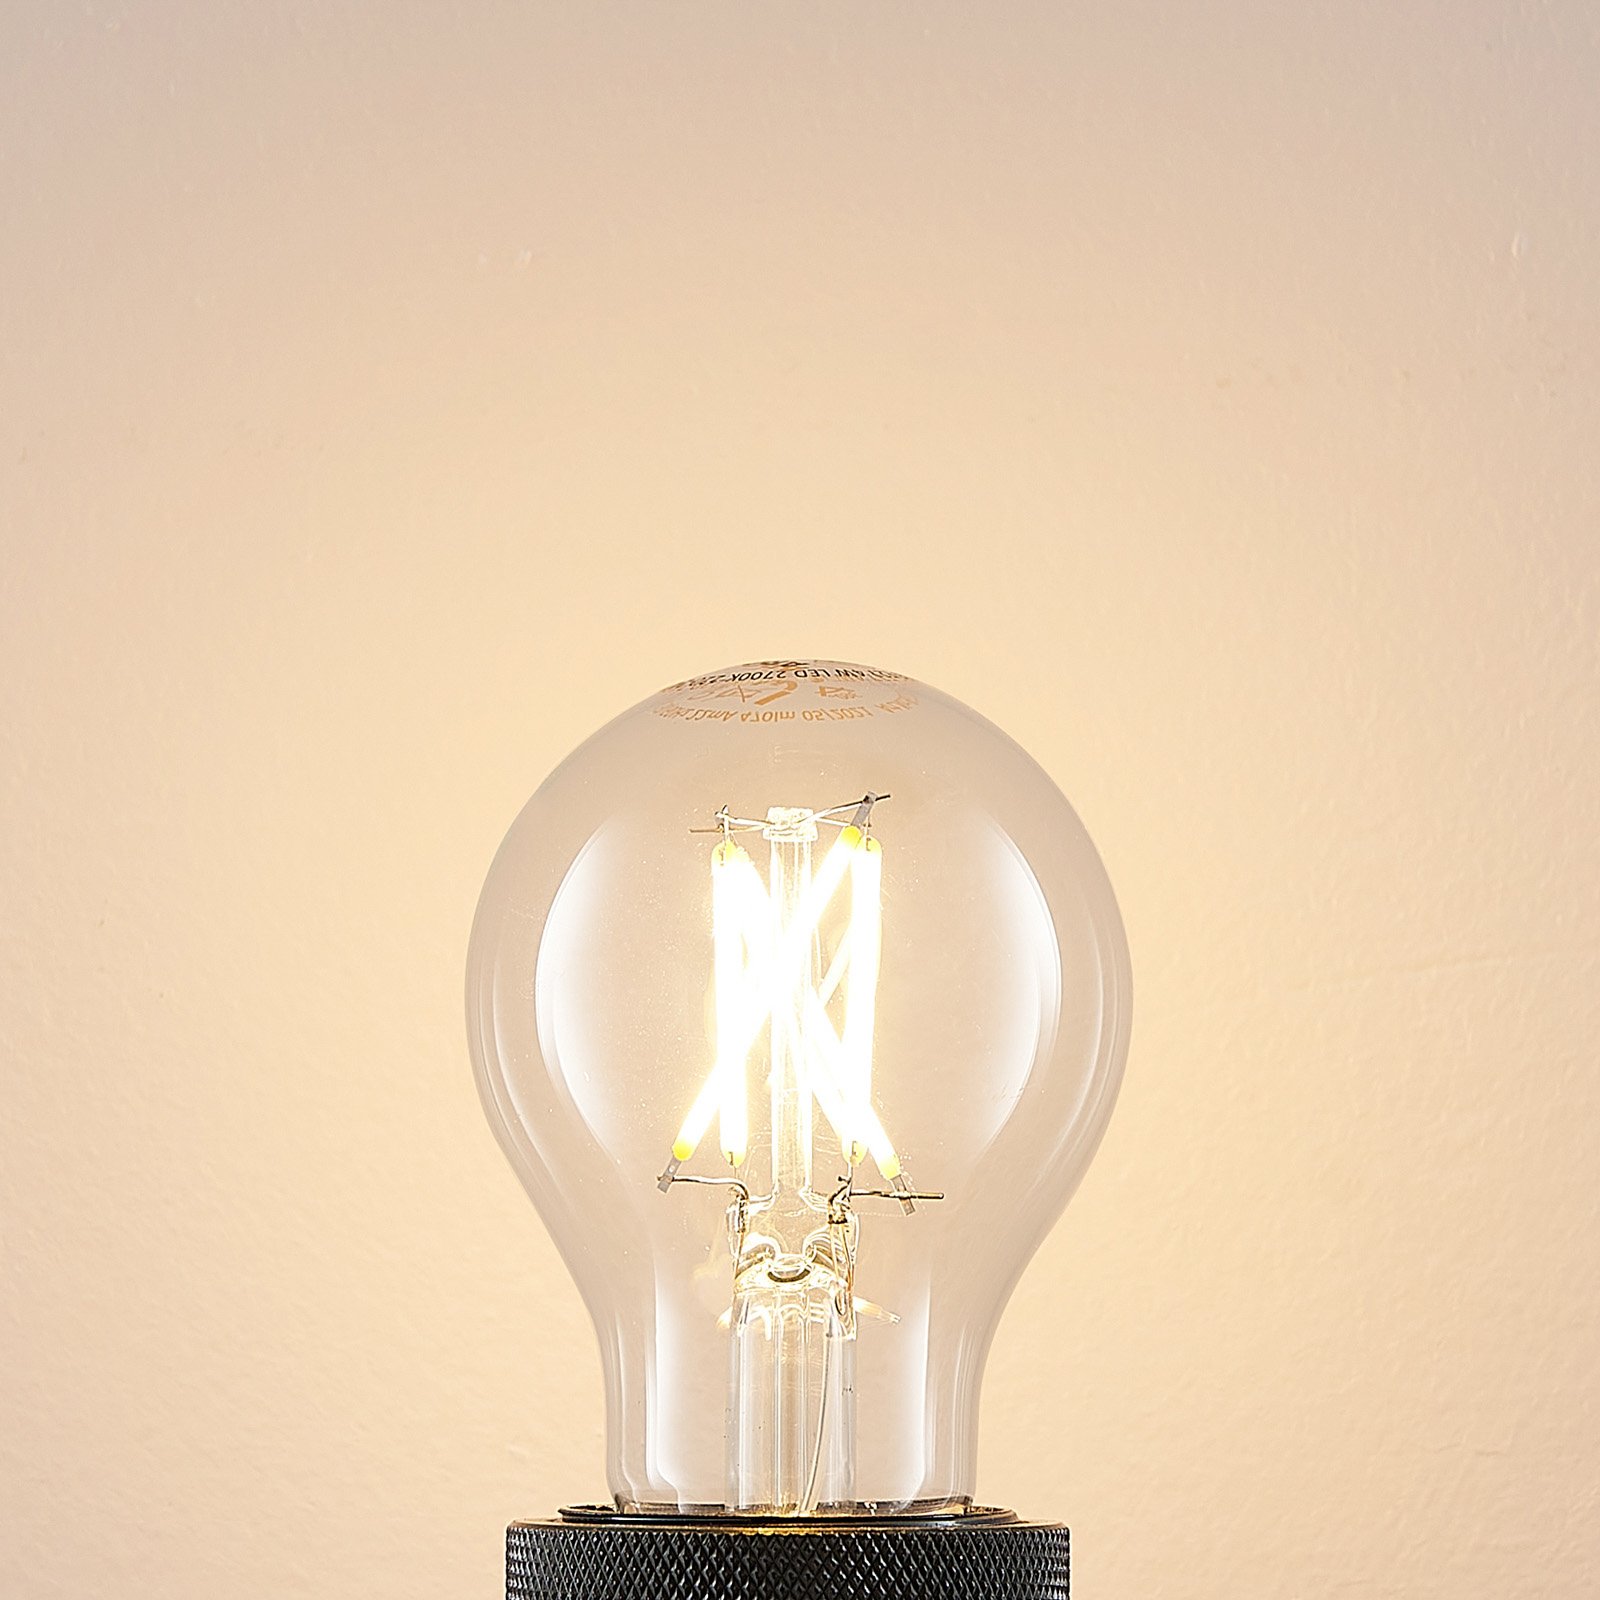 LED-Lampe E27 4W 2.700K Filament, dimmbar, klar